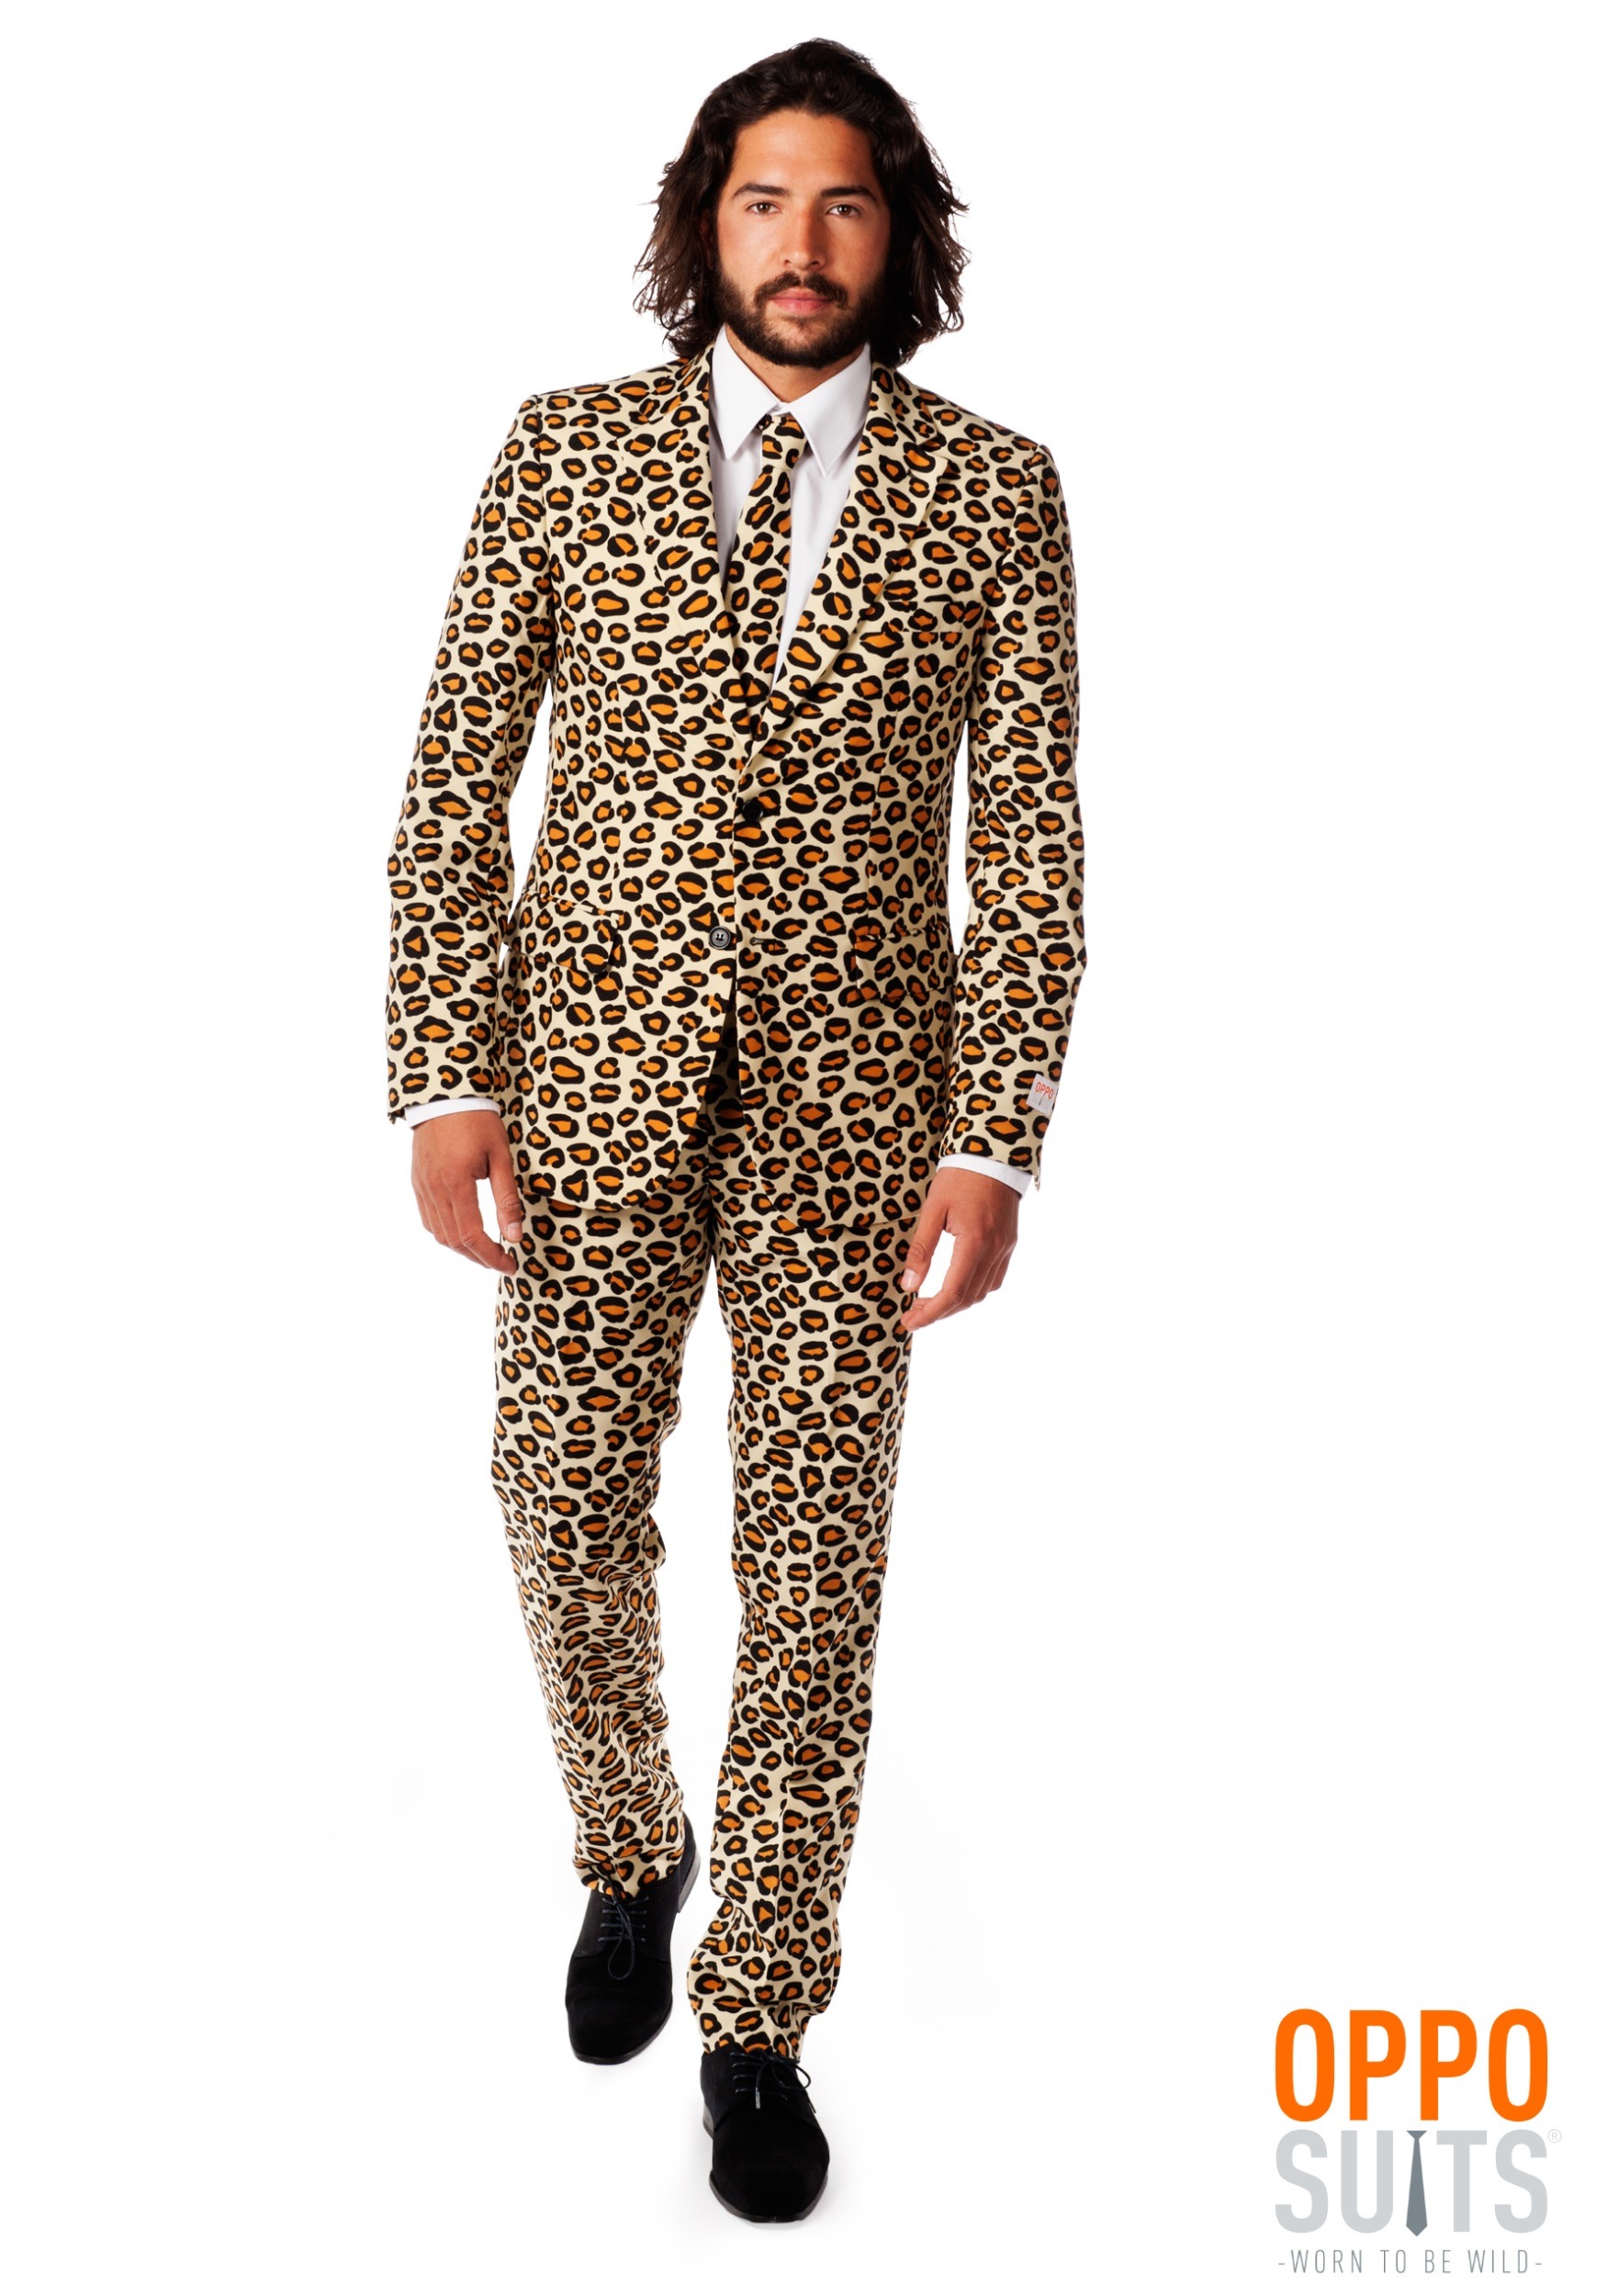 Men's OppoSuits Jaguar Print Costume Suit